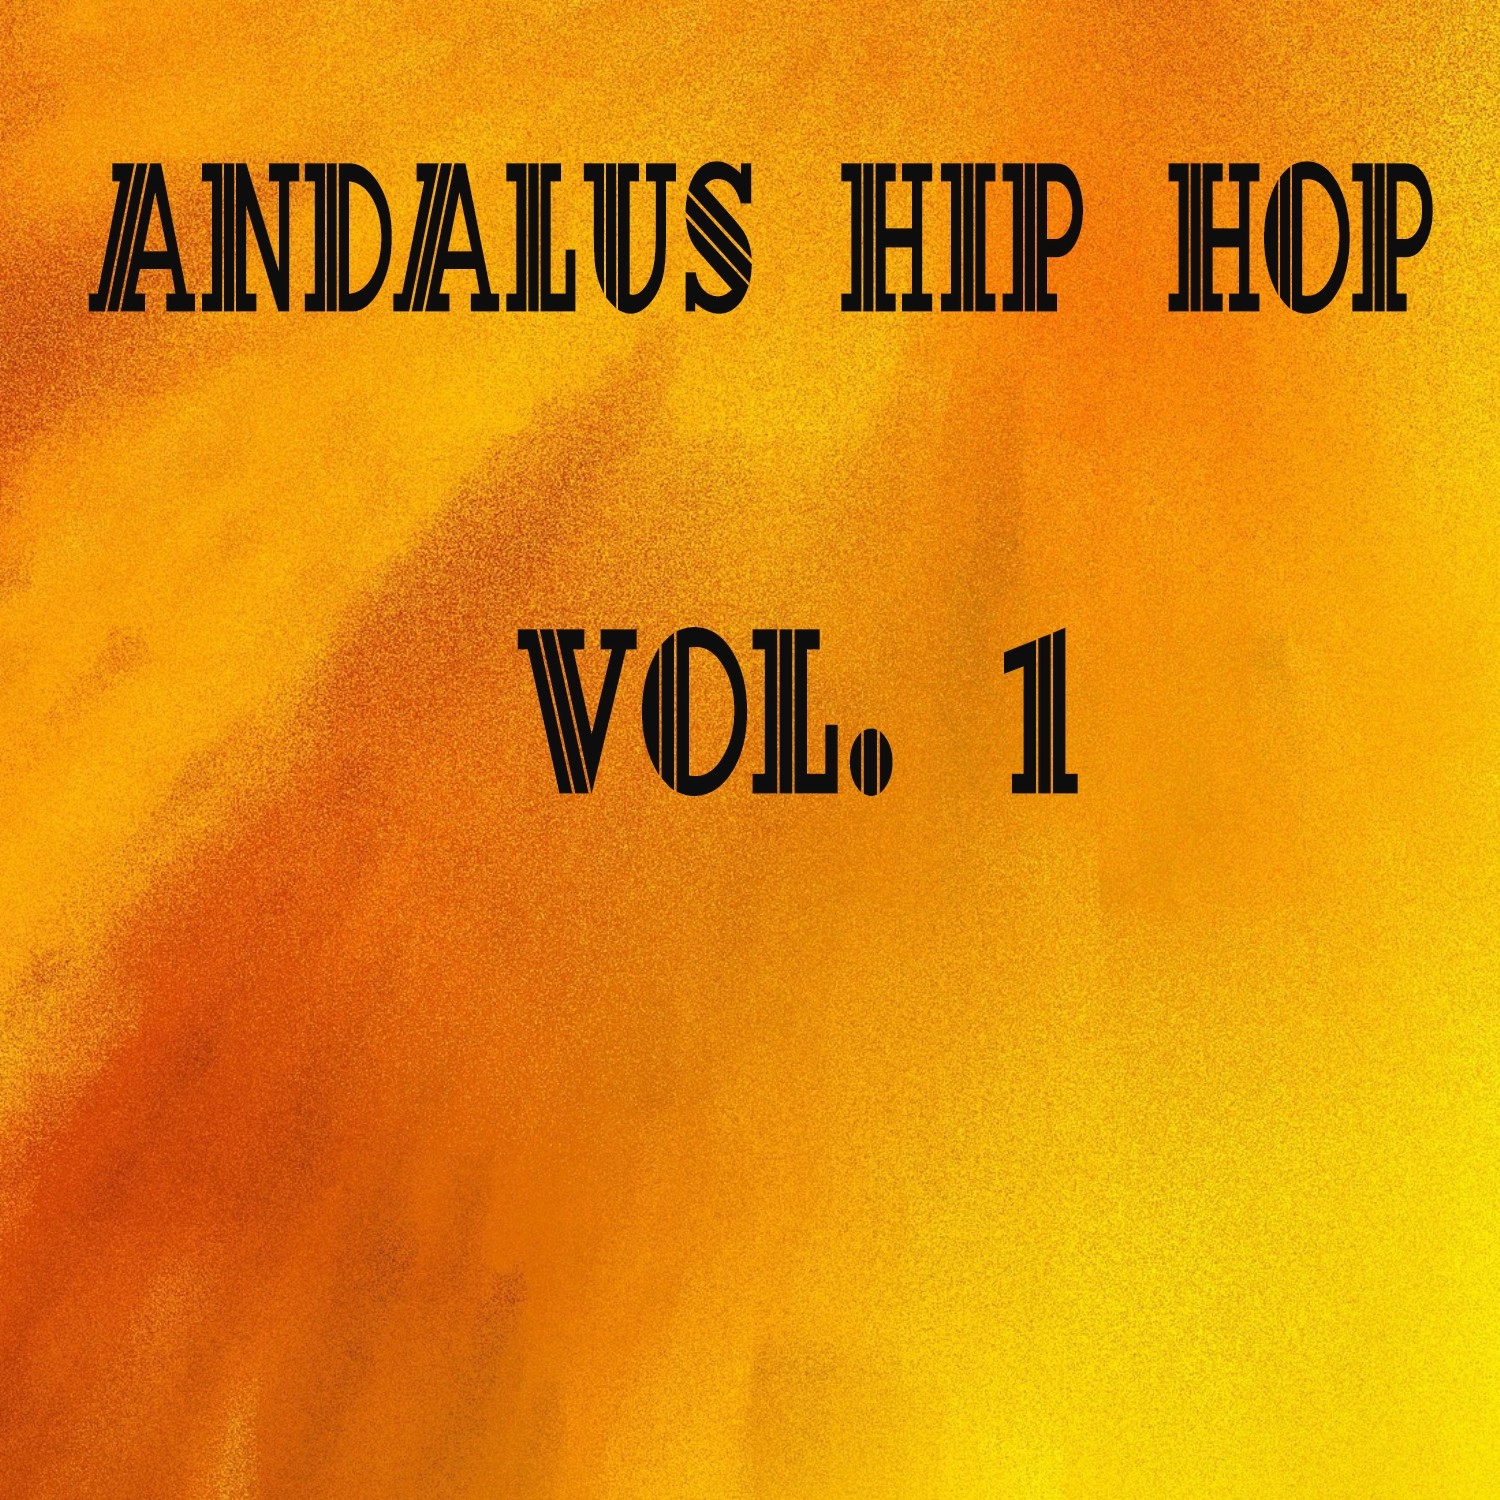 Andalus Hip Hop, Vol. 1